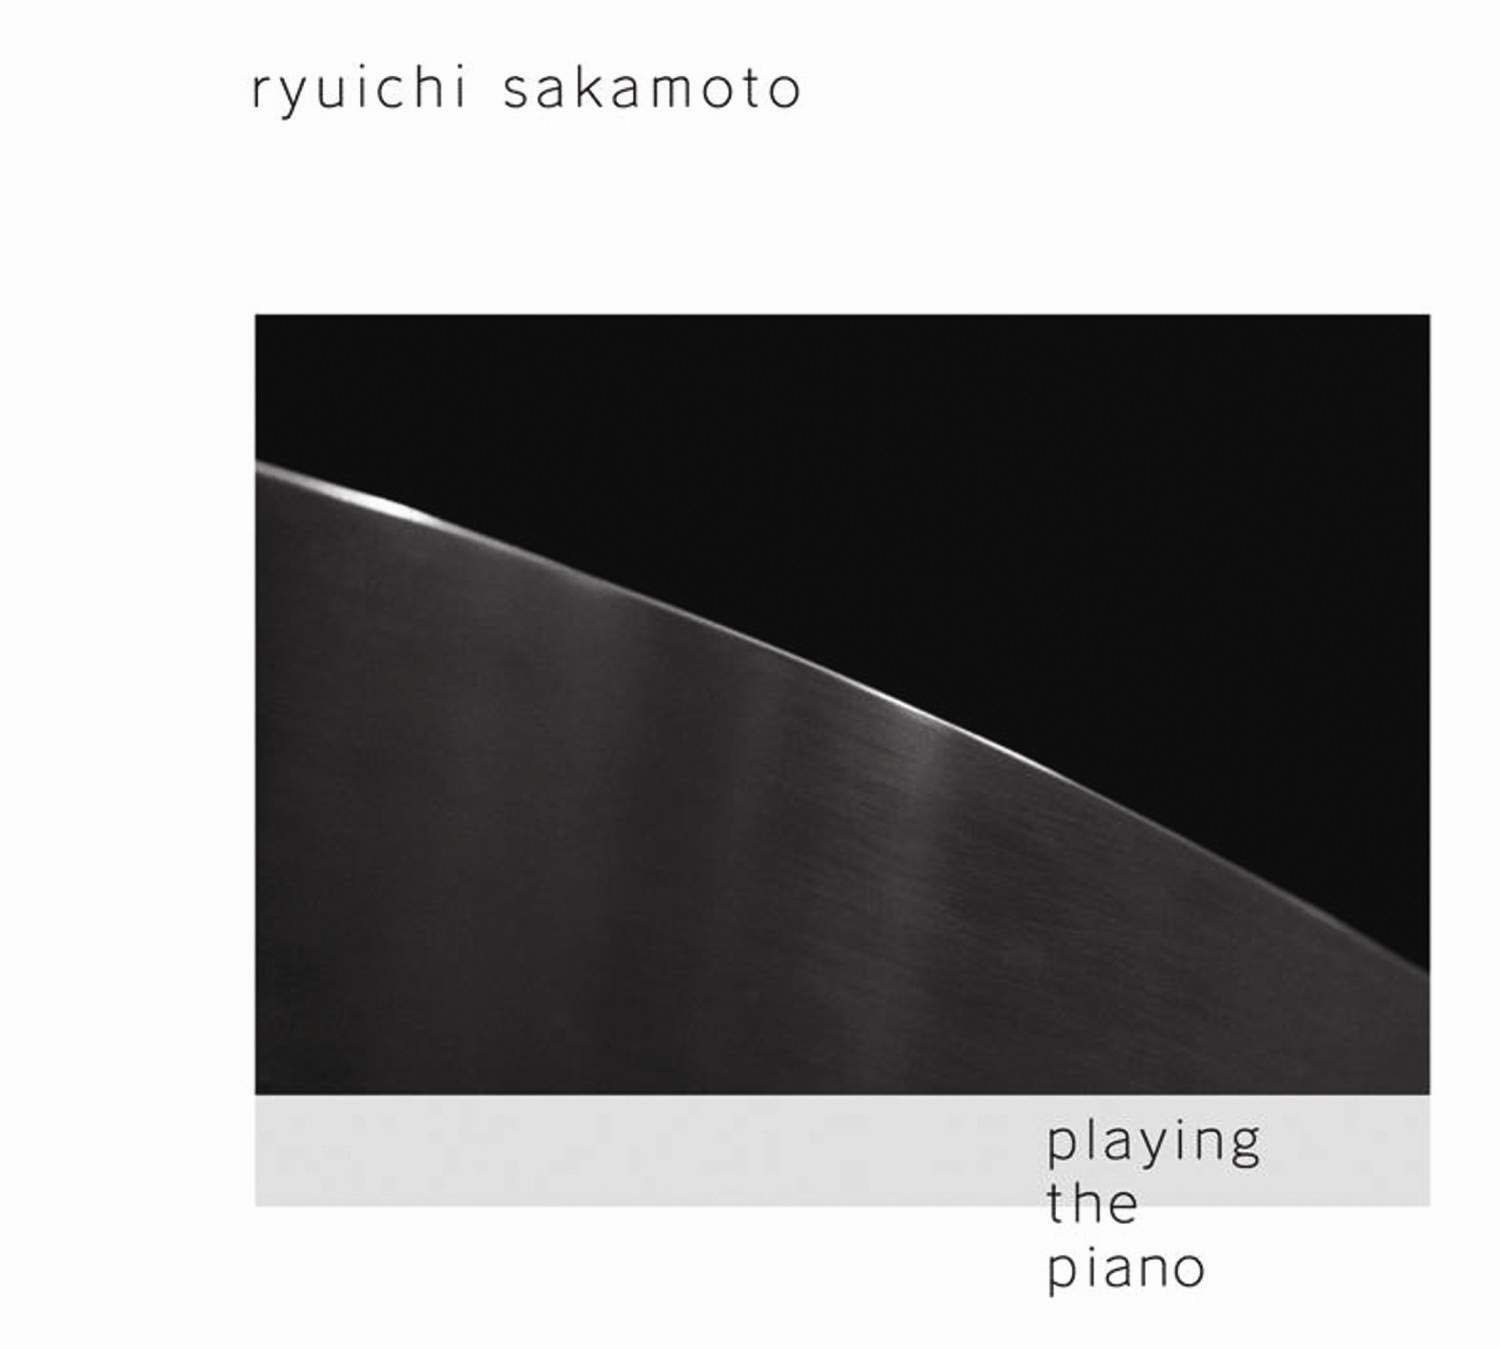 ryuichi sakamoto b2 unit download